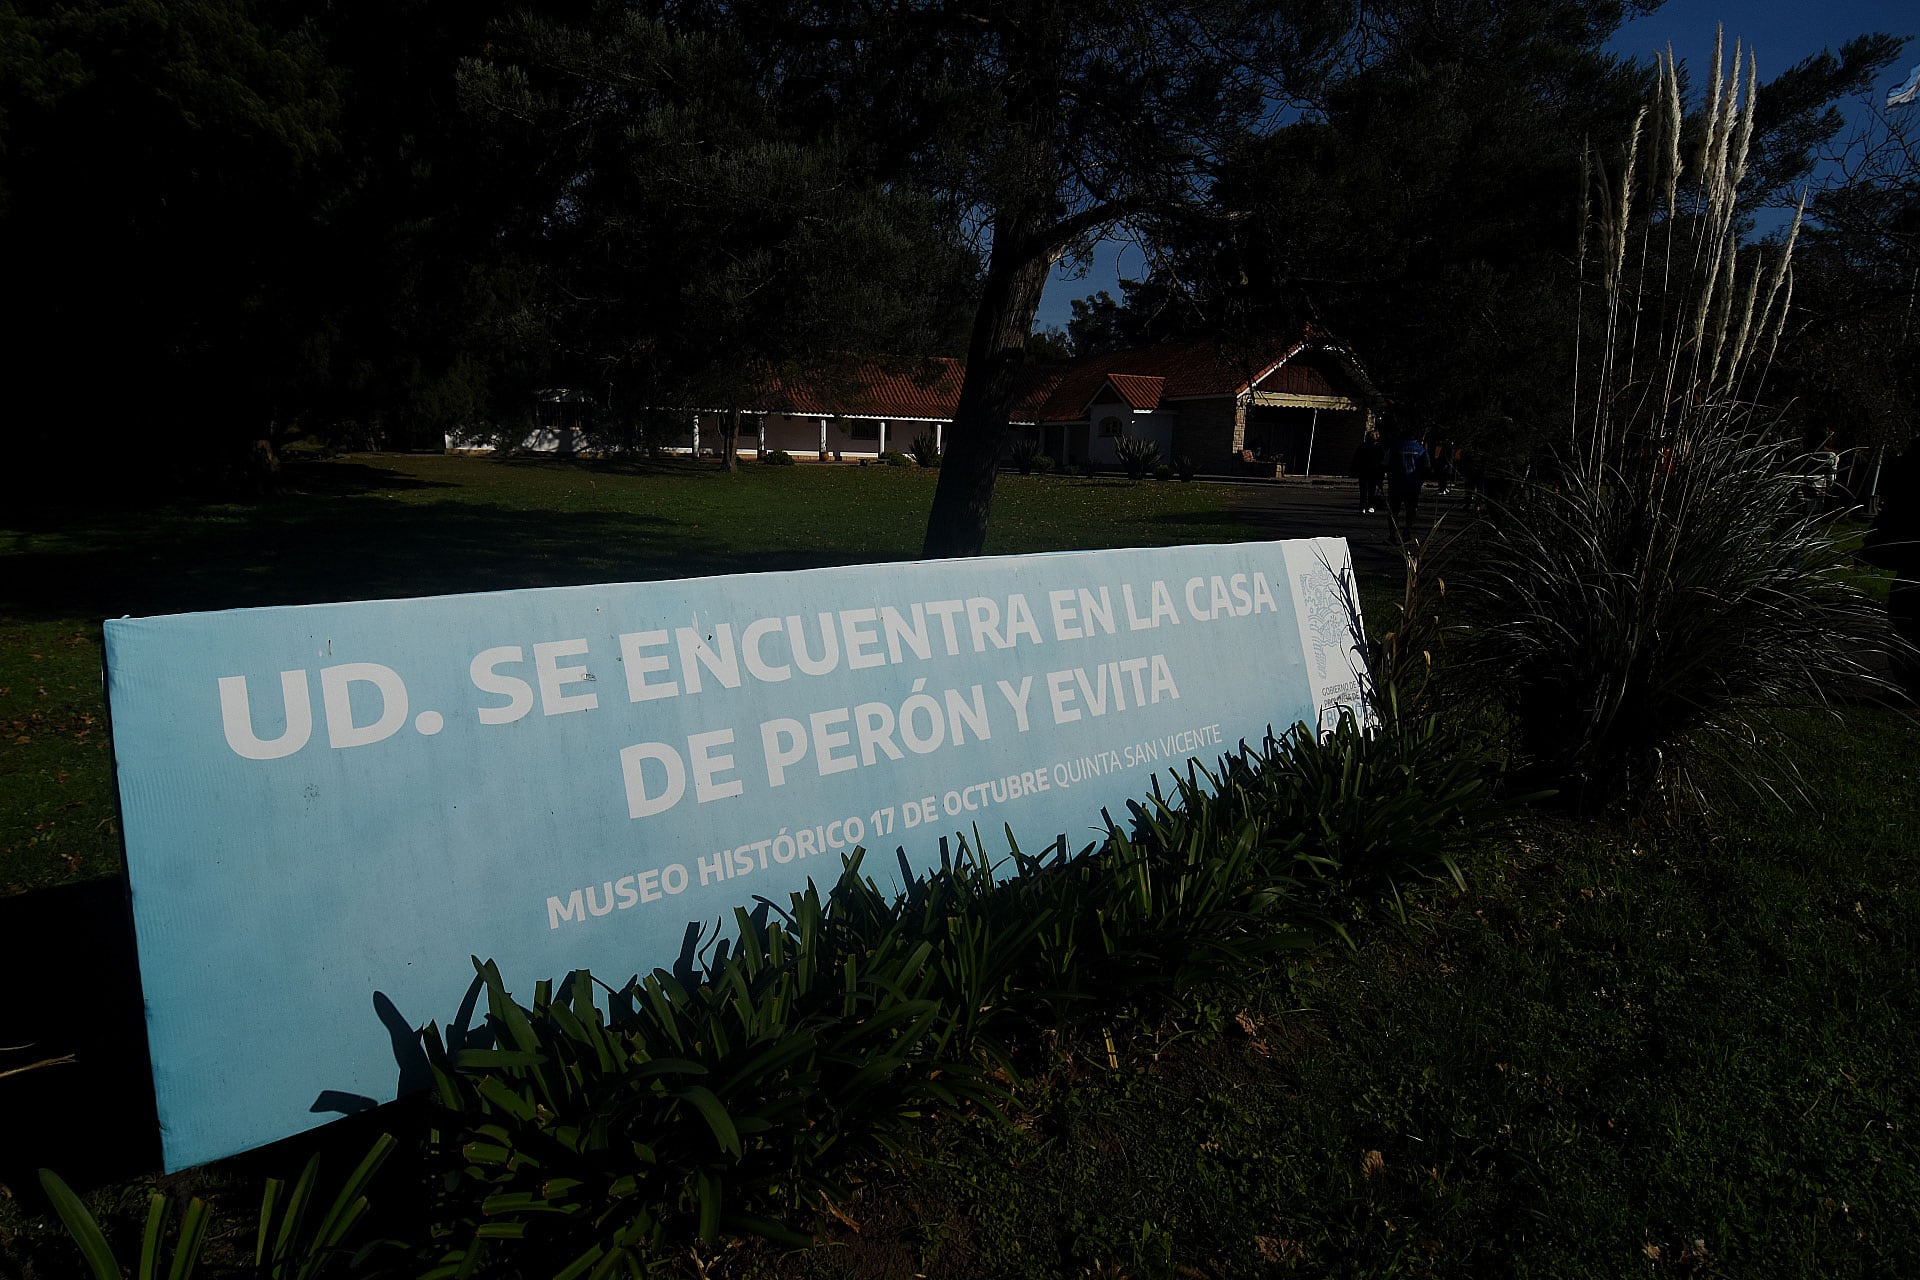 Quinta de Peron / San Vicente